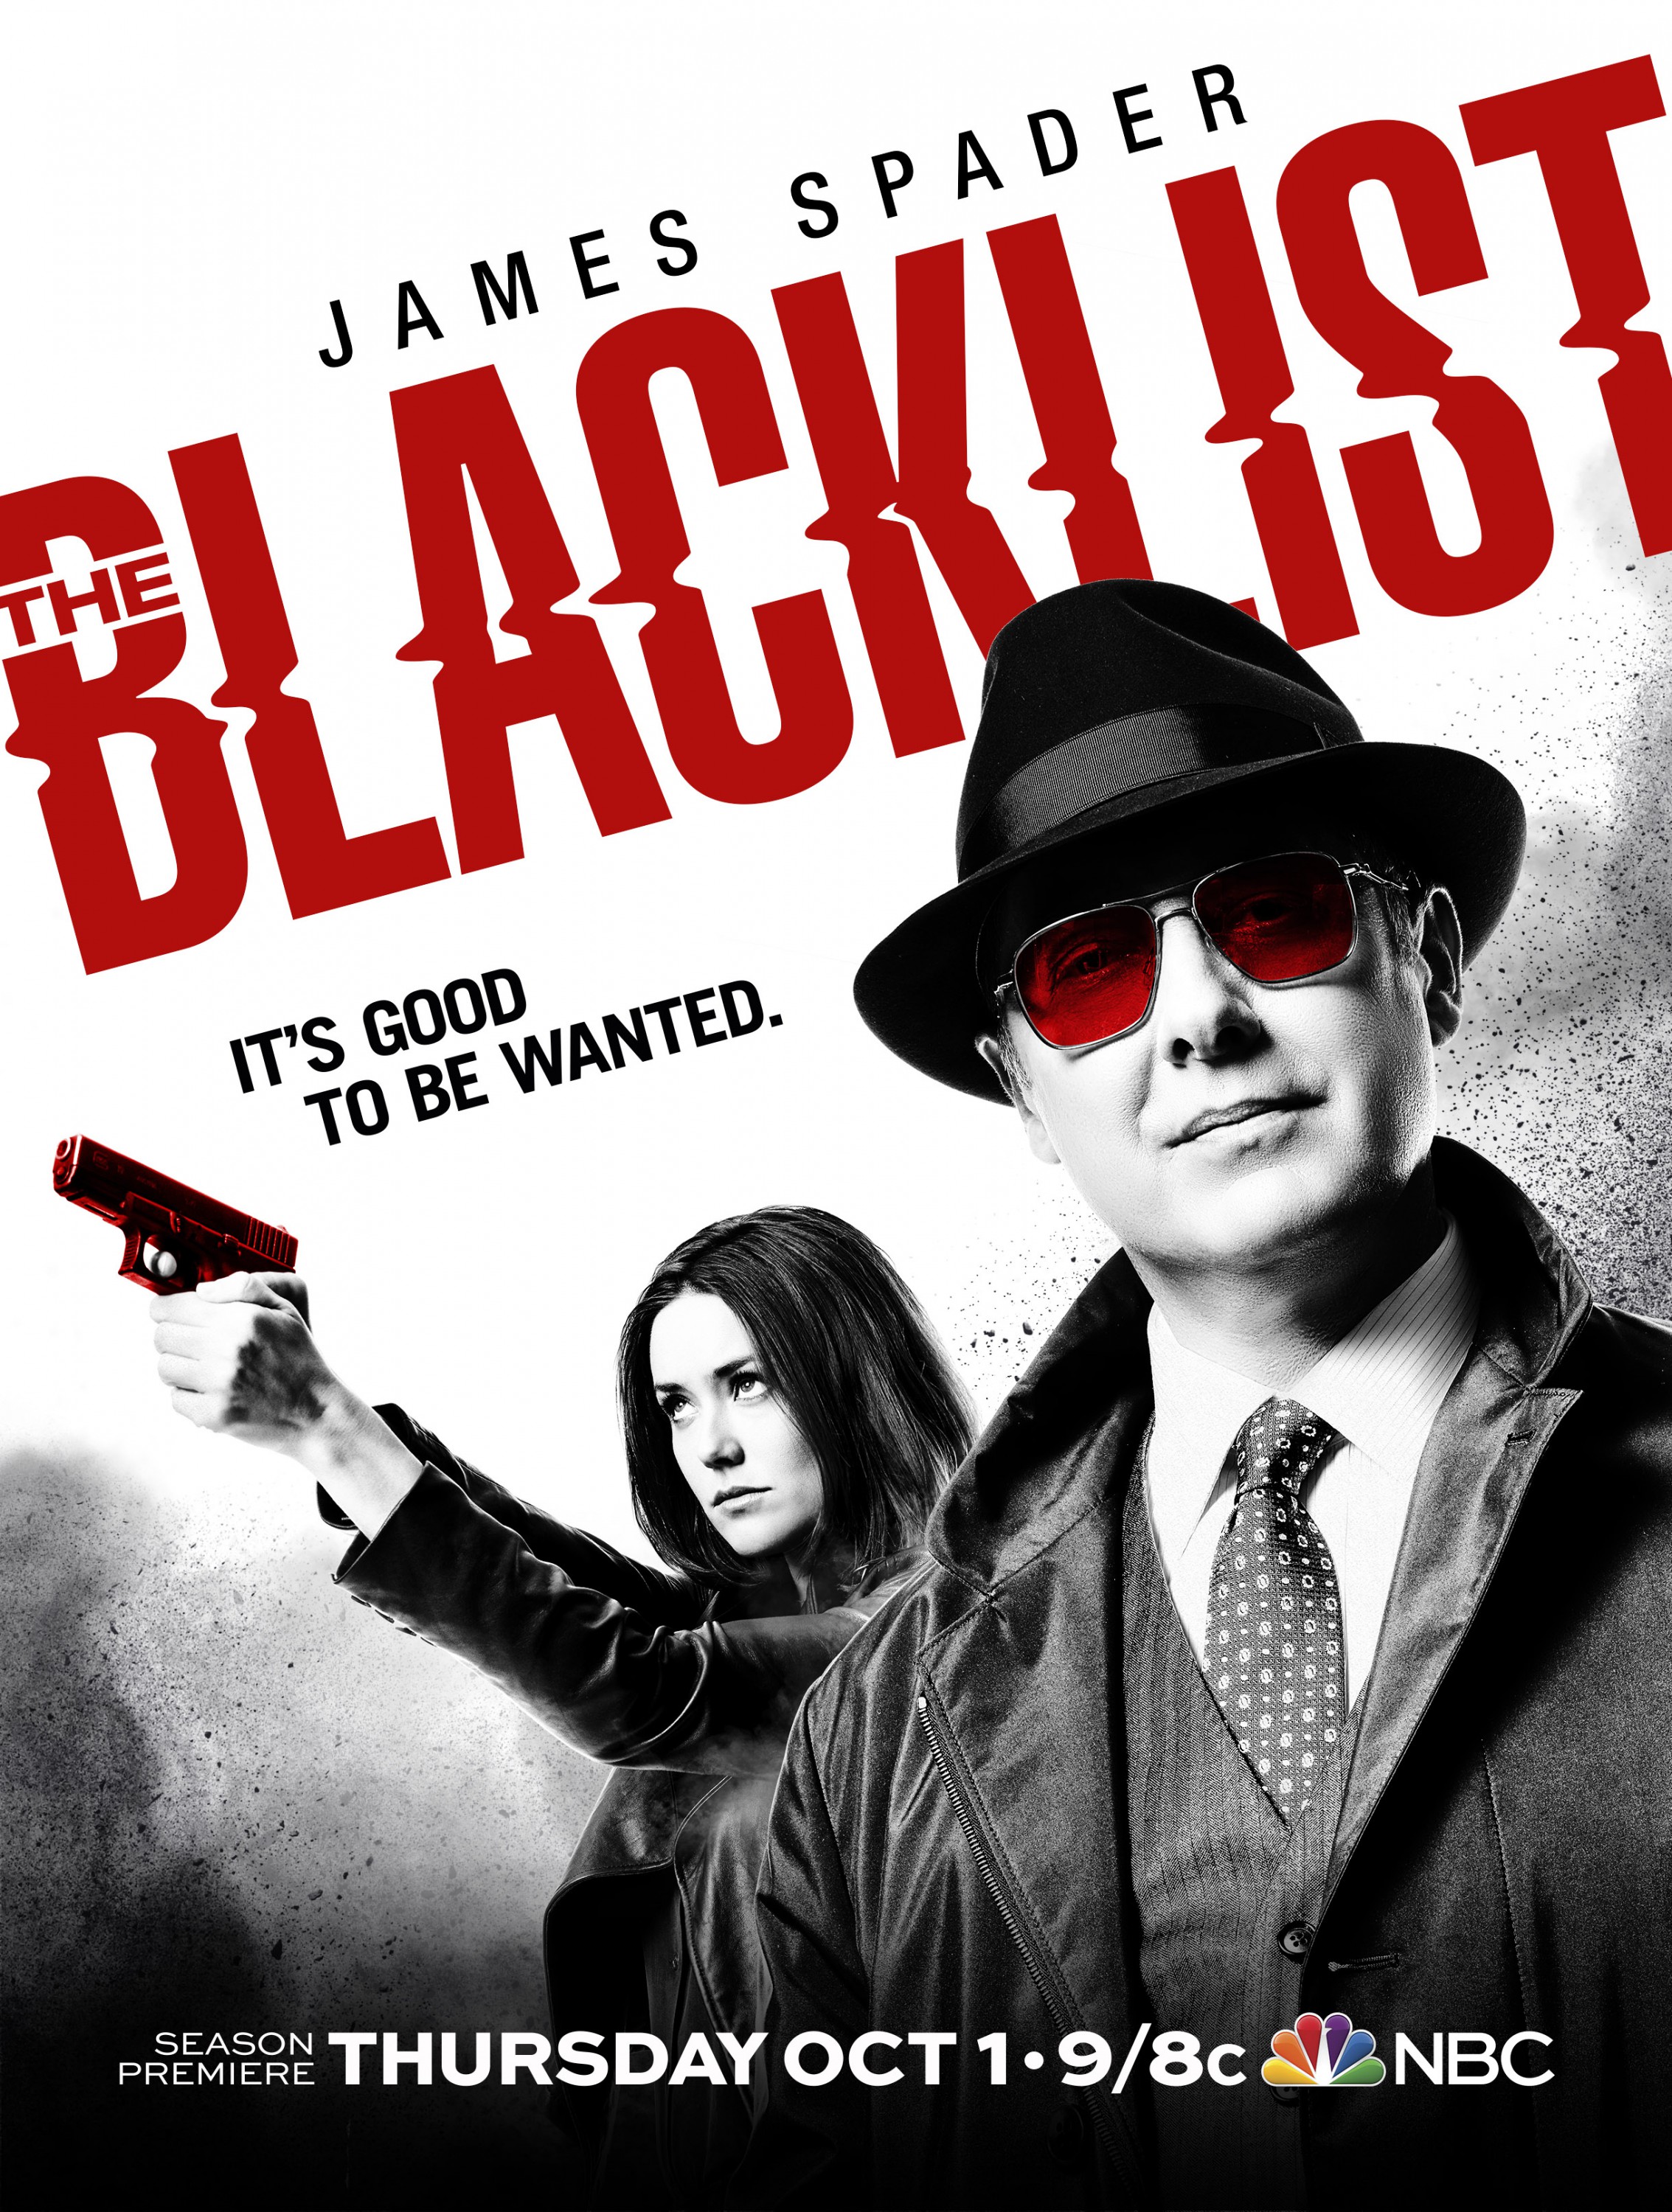 Mega Sized TV Poster Image for The Blacklist (#18 of 26)